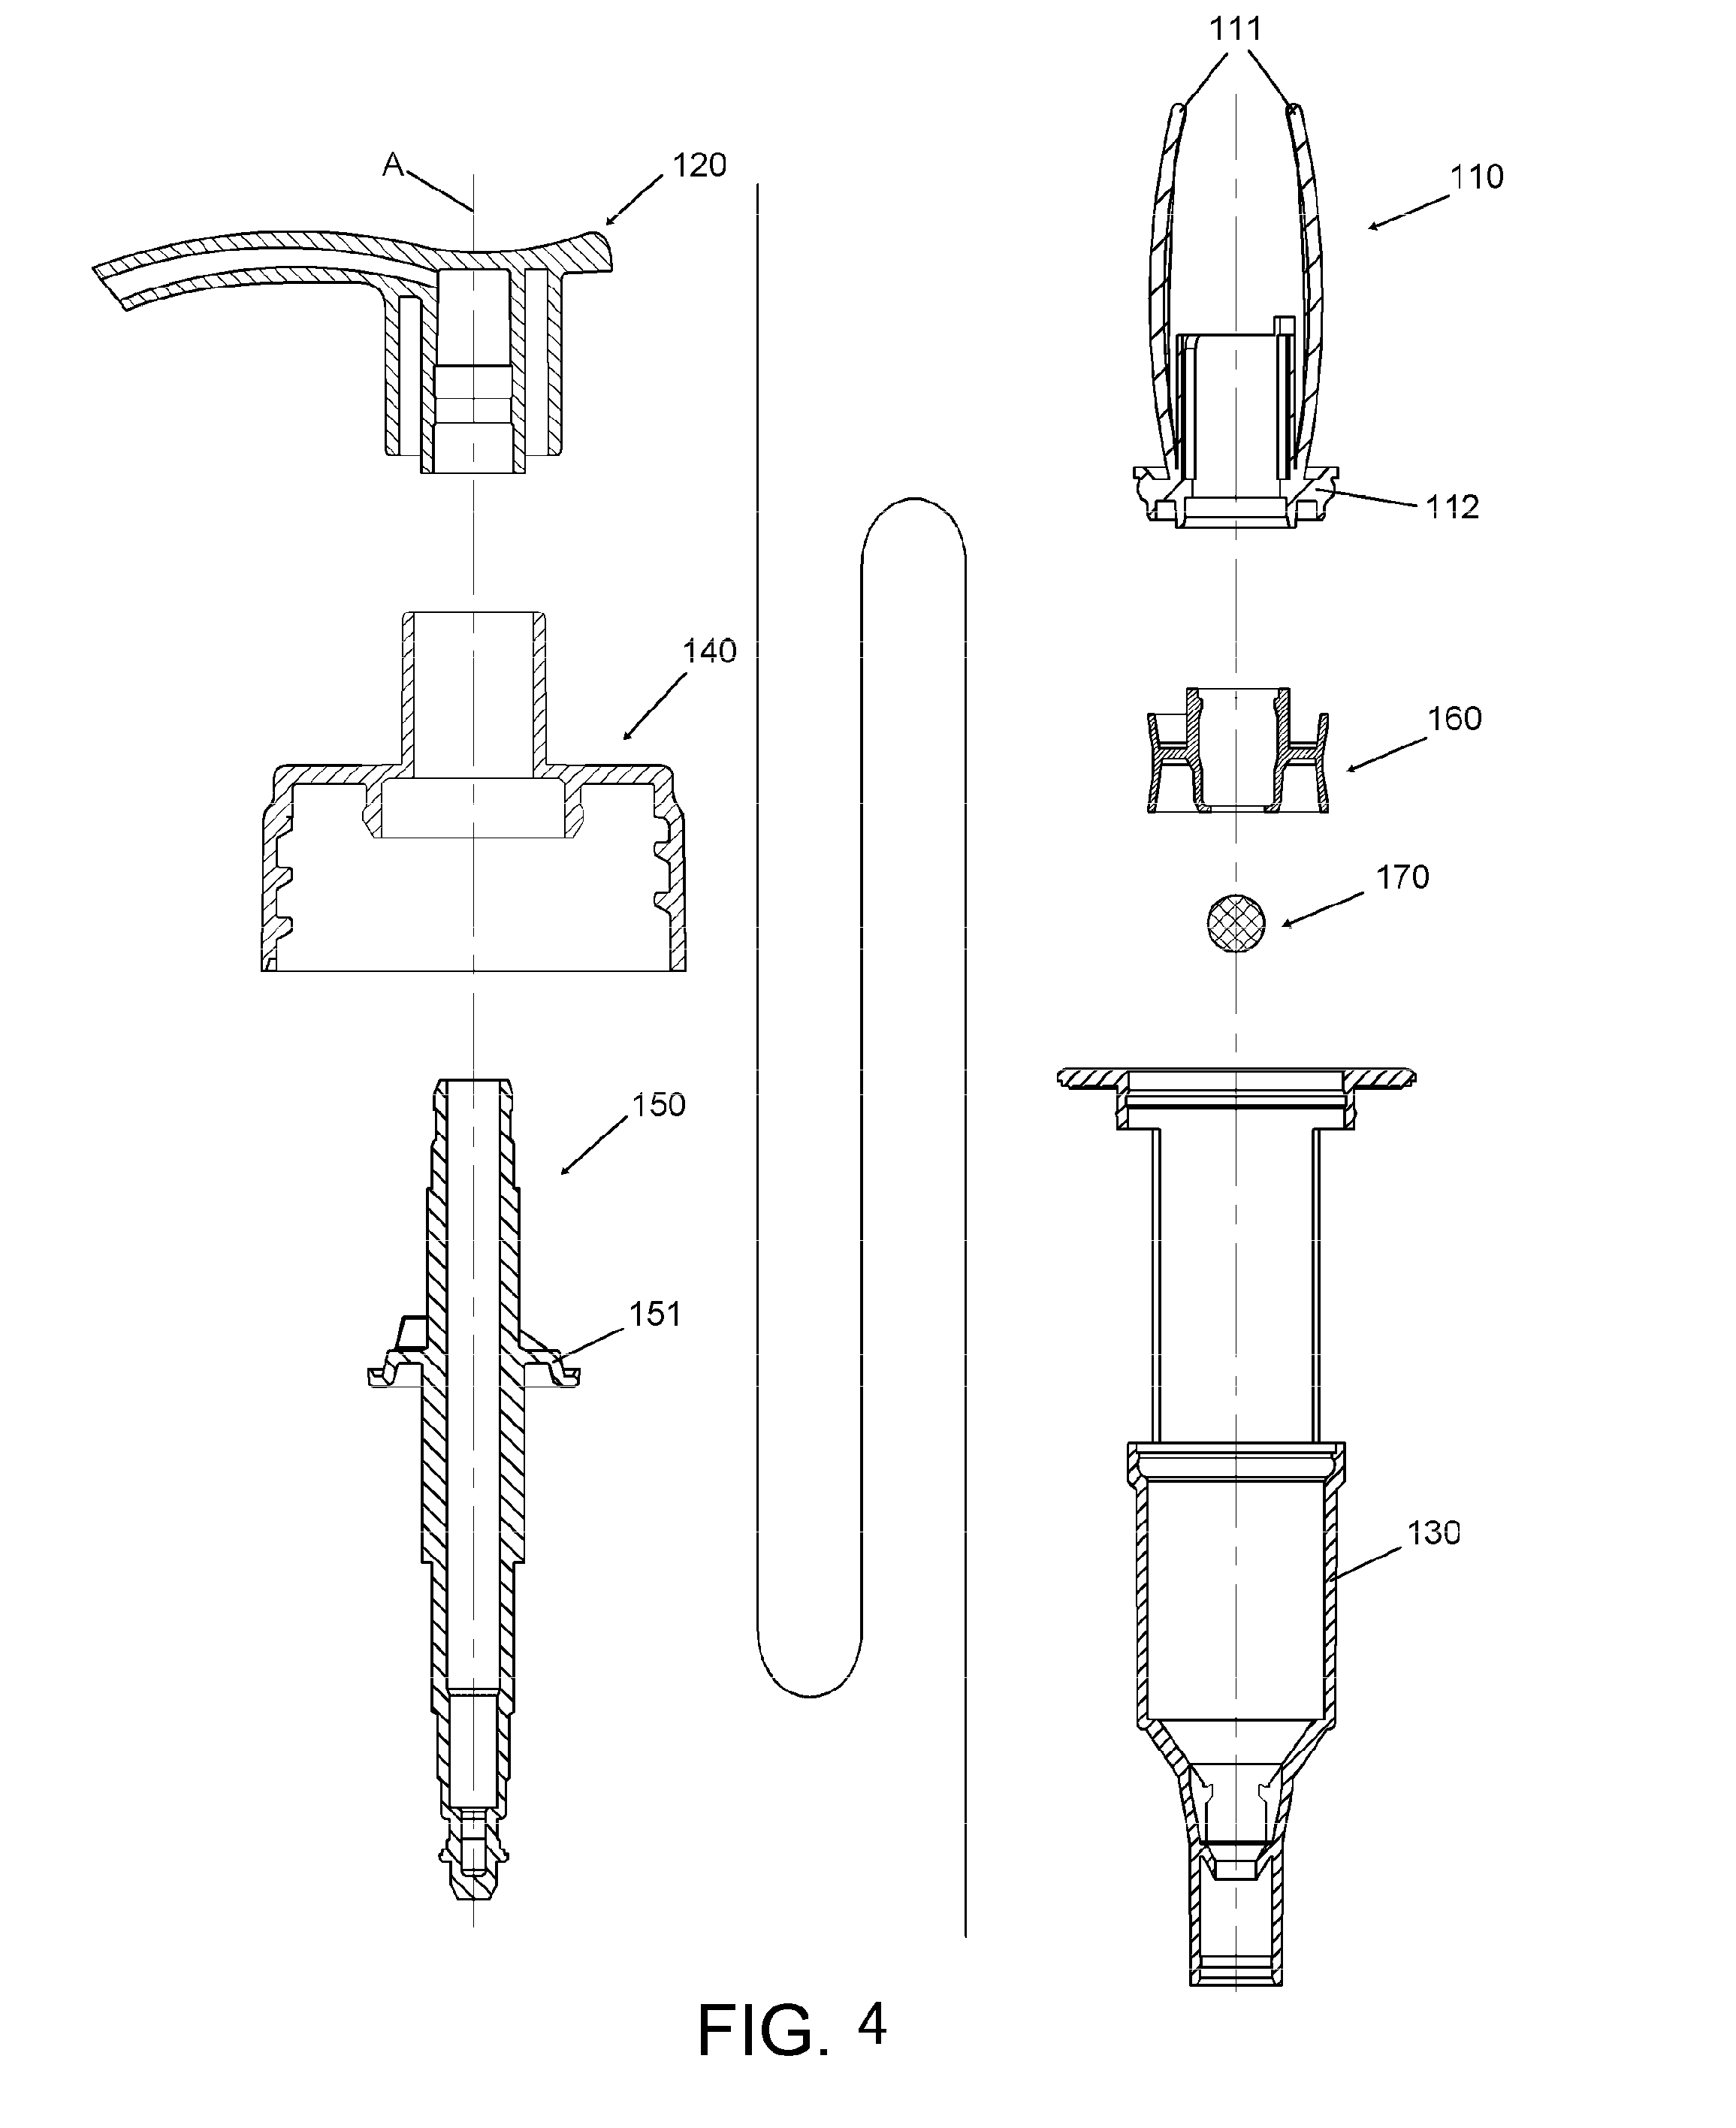 Press-type liquid pump